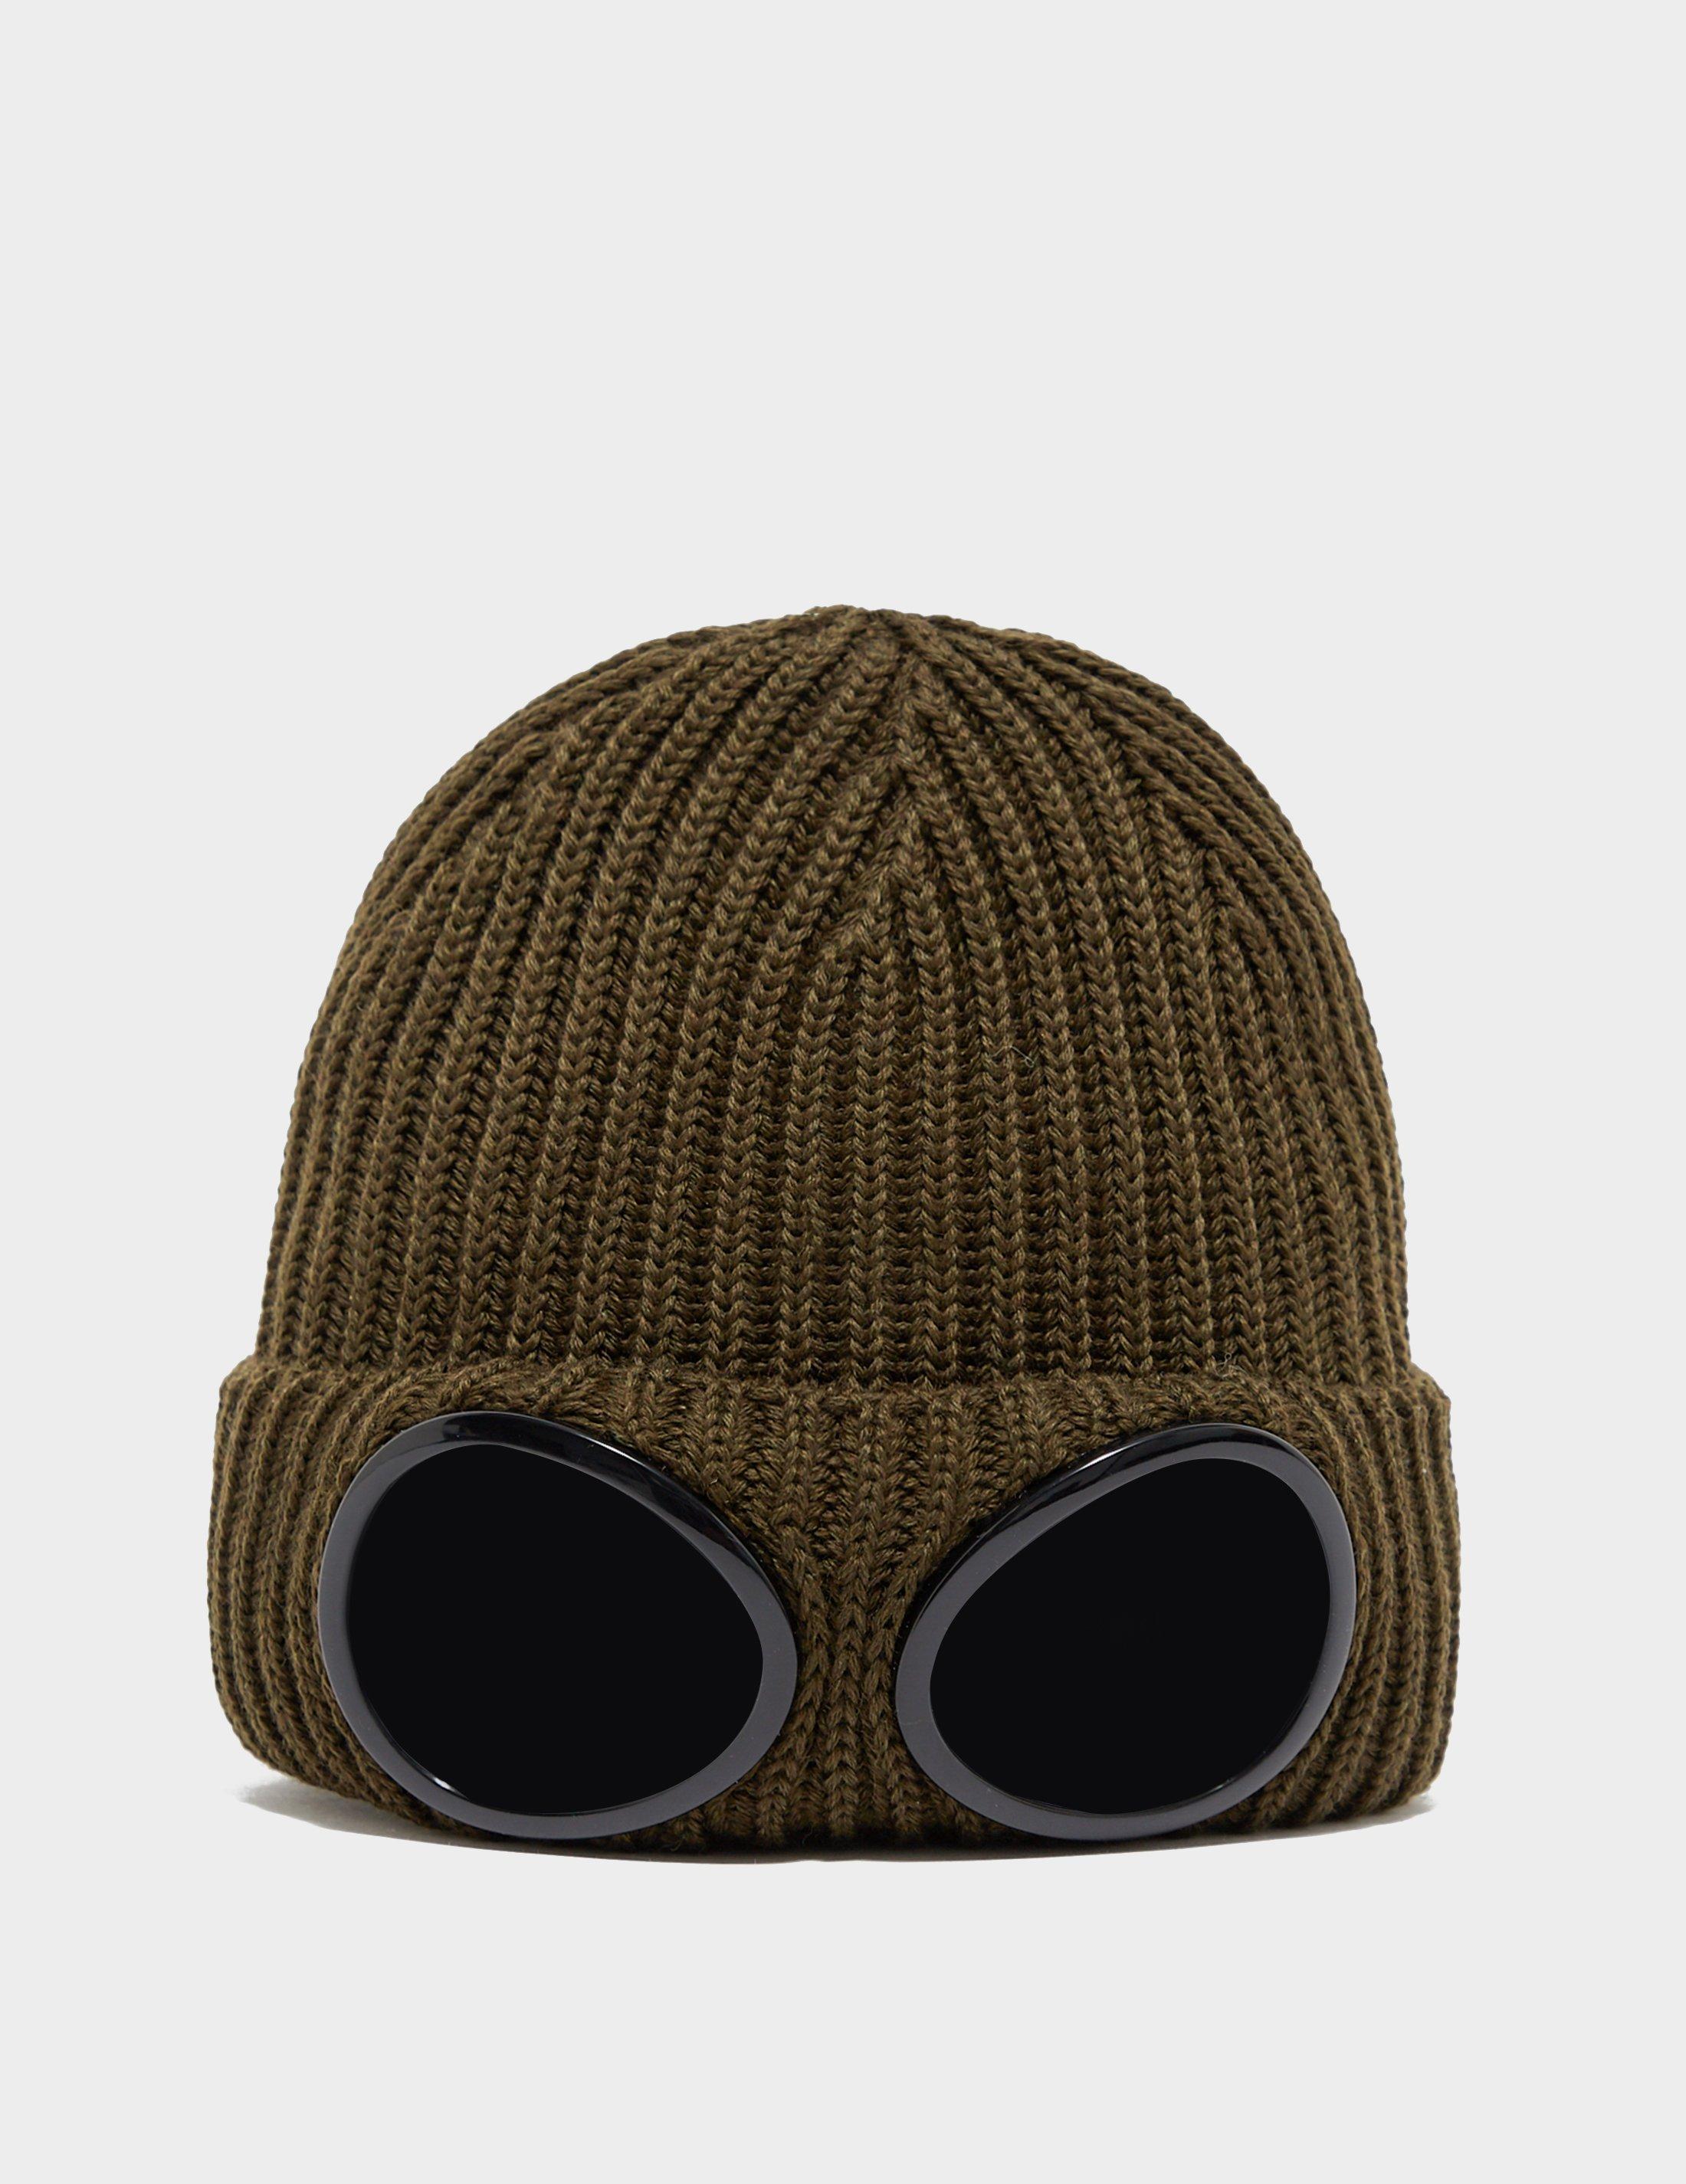 New CP Company Black Army Green Goggle Hat Cap Beanie